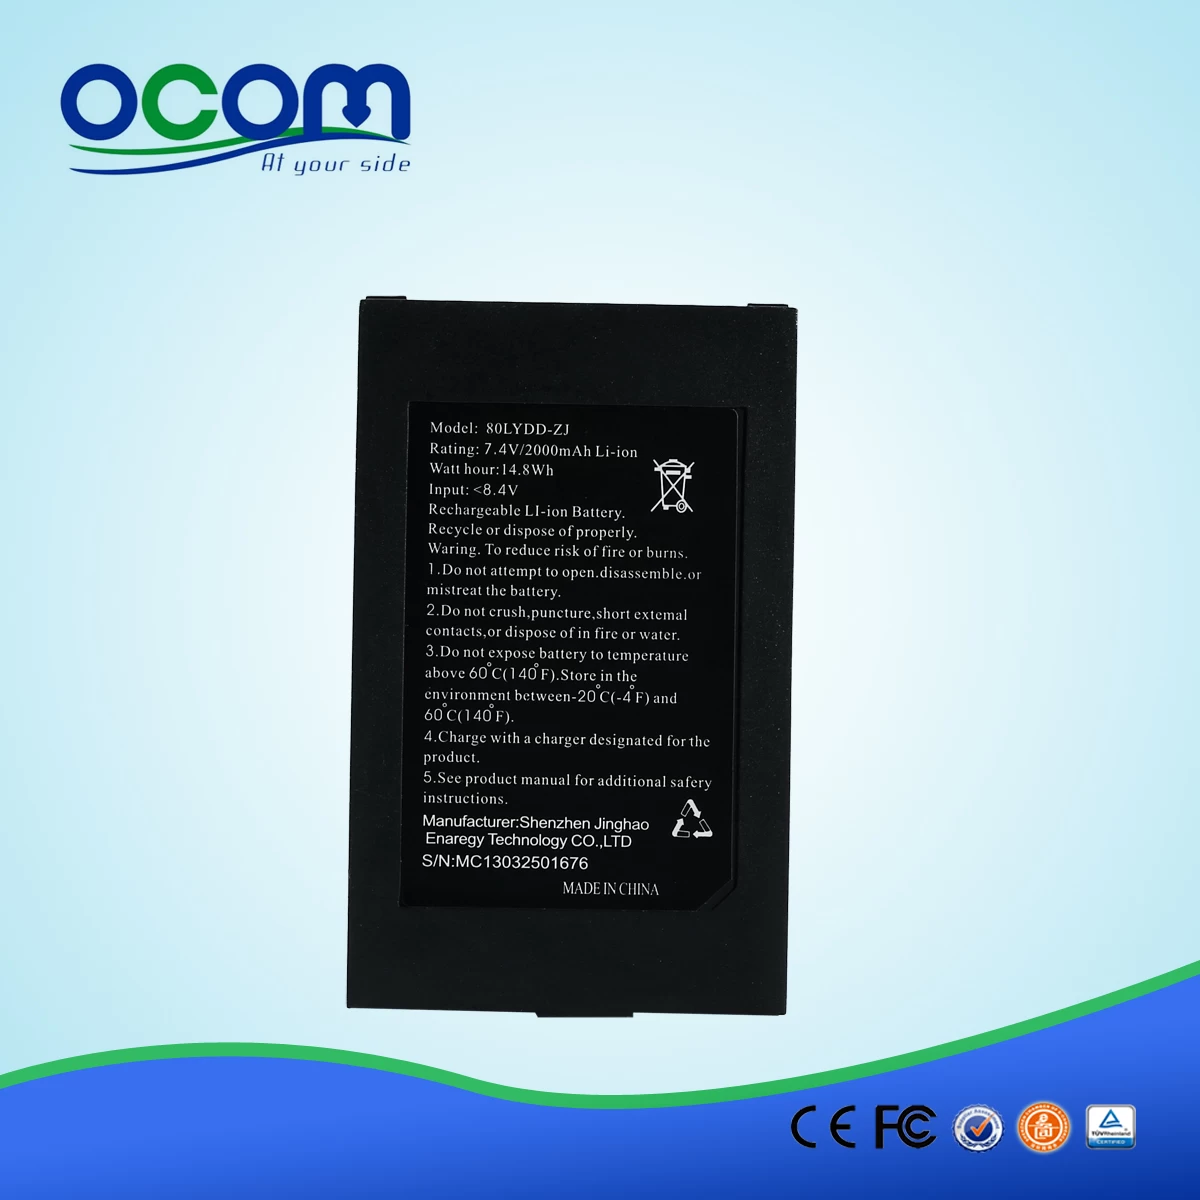 (OCPP-M082) Android IOS Java Windows Supported 80mm Mini Portable Bluetooth Receipt Printer